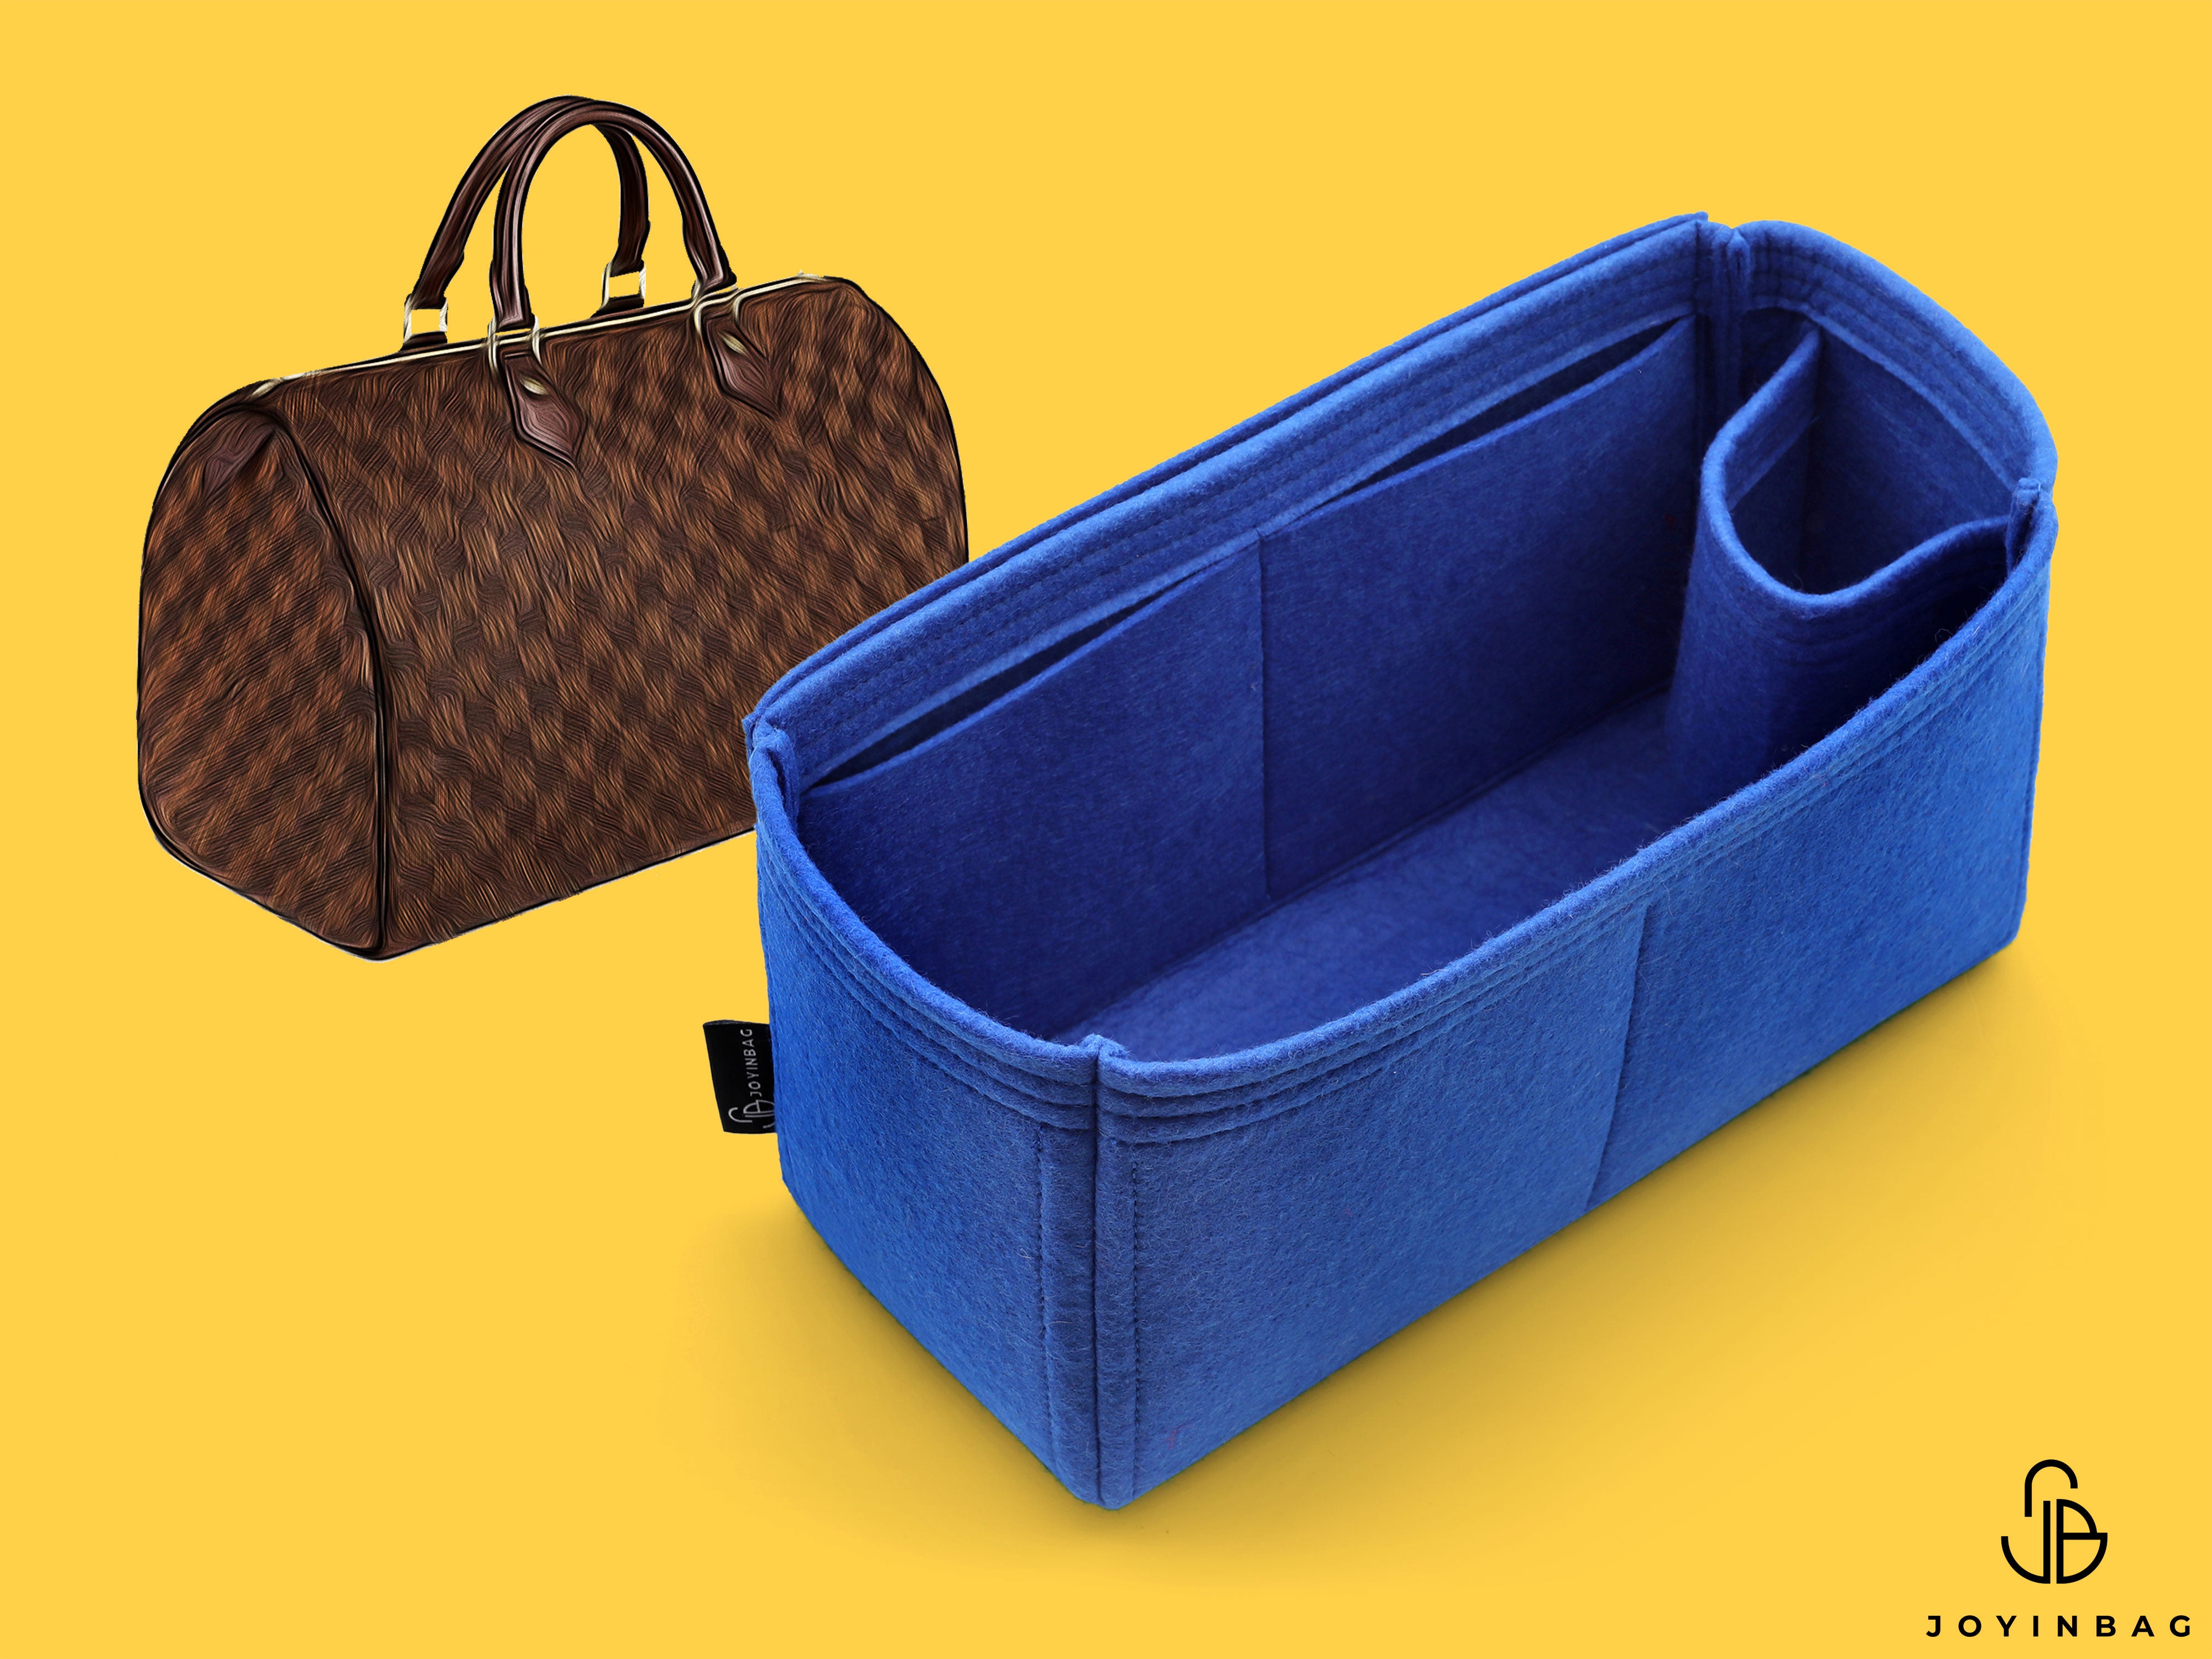 Handbag Organizer For Louis Vuitton Speedy 35 Bag with Single Bottle H